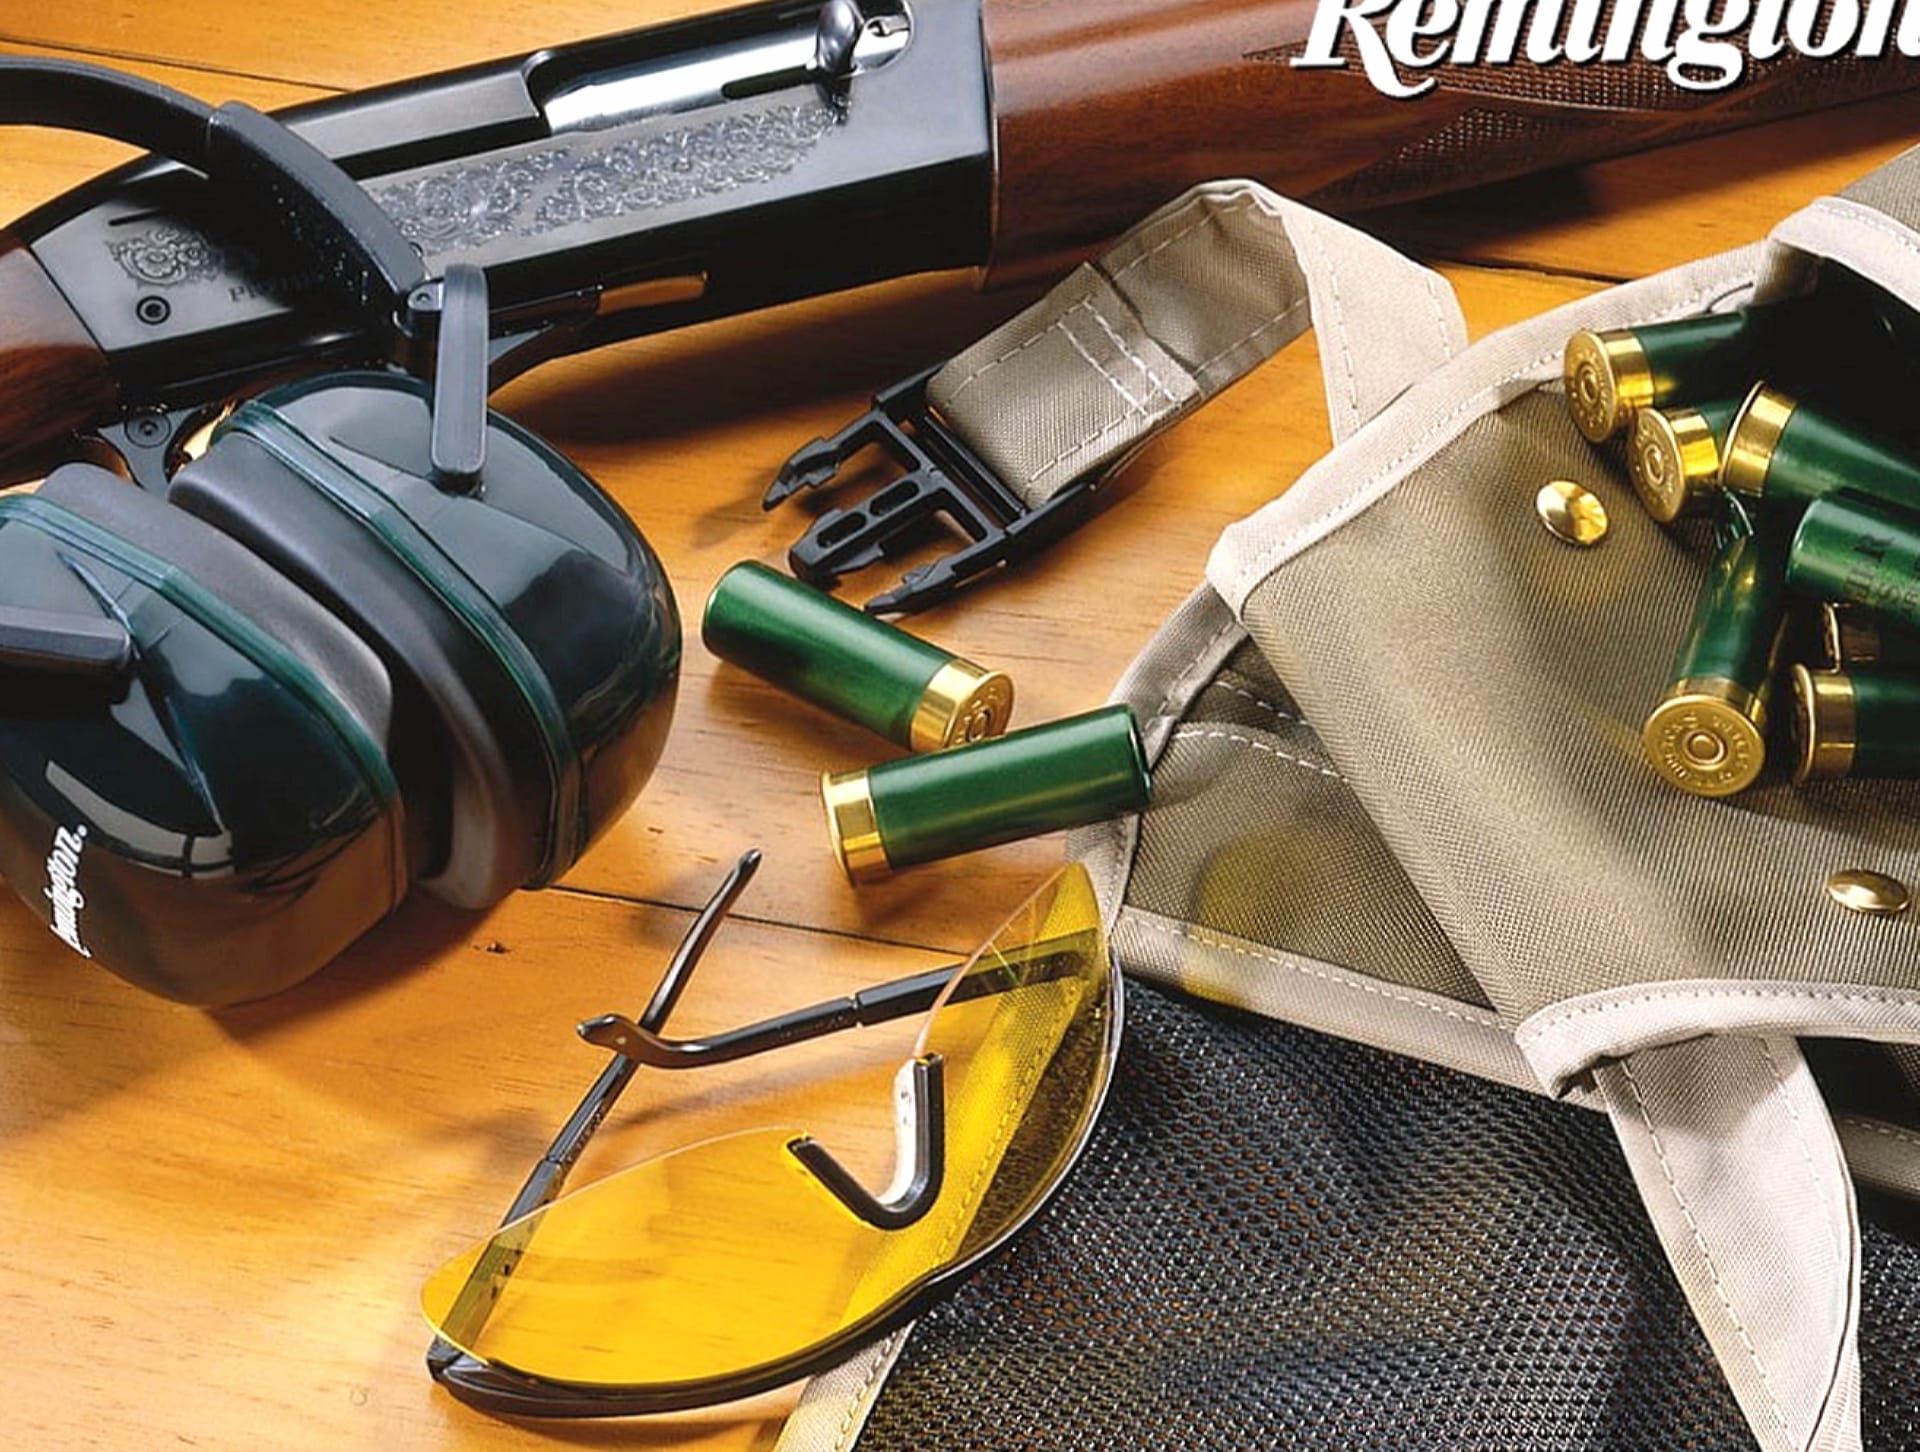 Remington Shotgun at 1280 x 960 size wallpapers HD quality